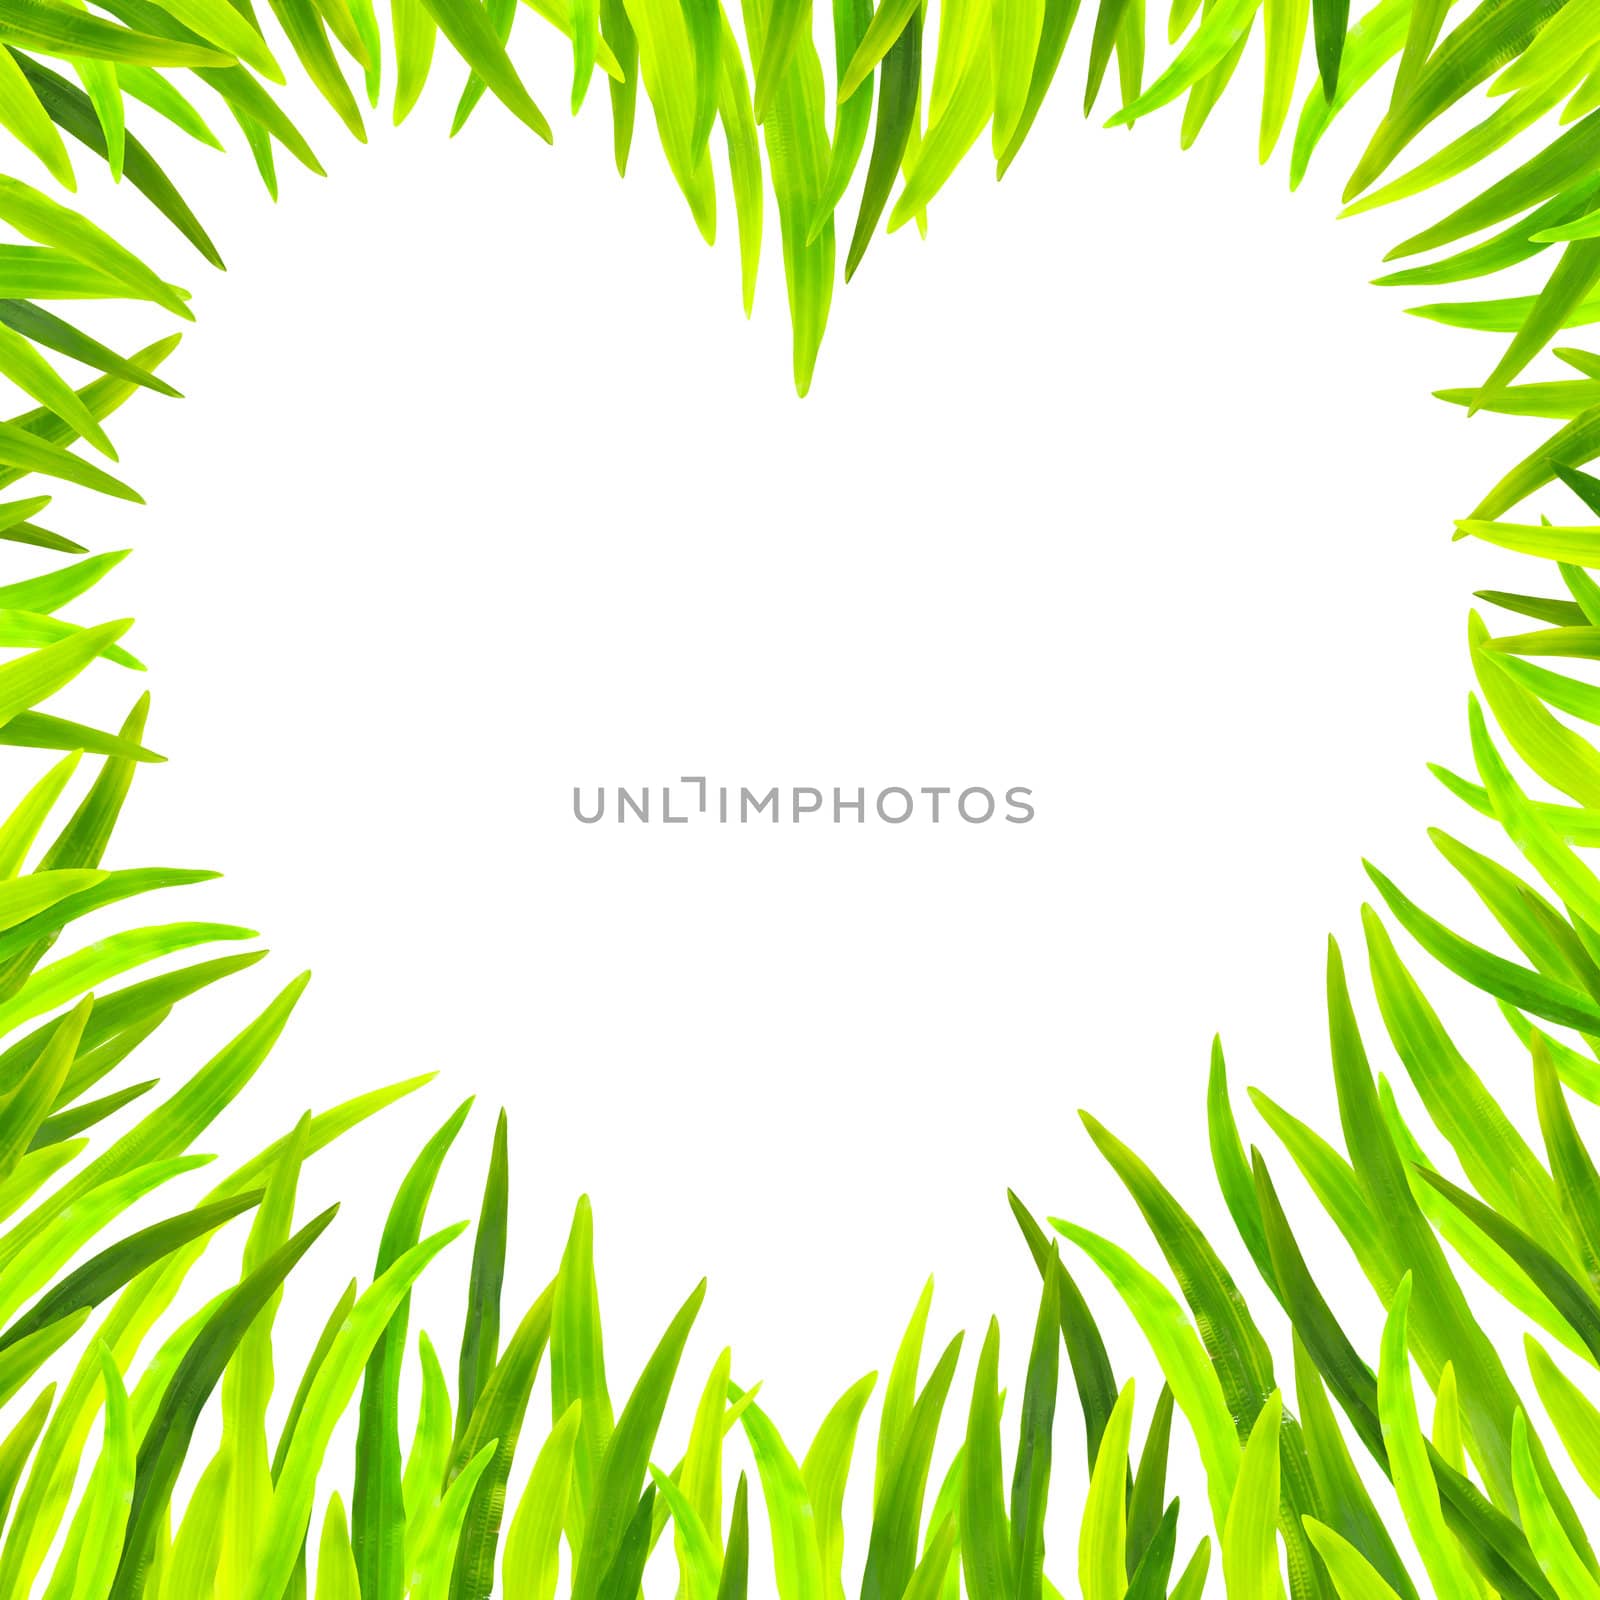 Grass heart-shaped frame in white background . by bajita111122